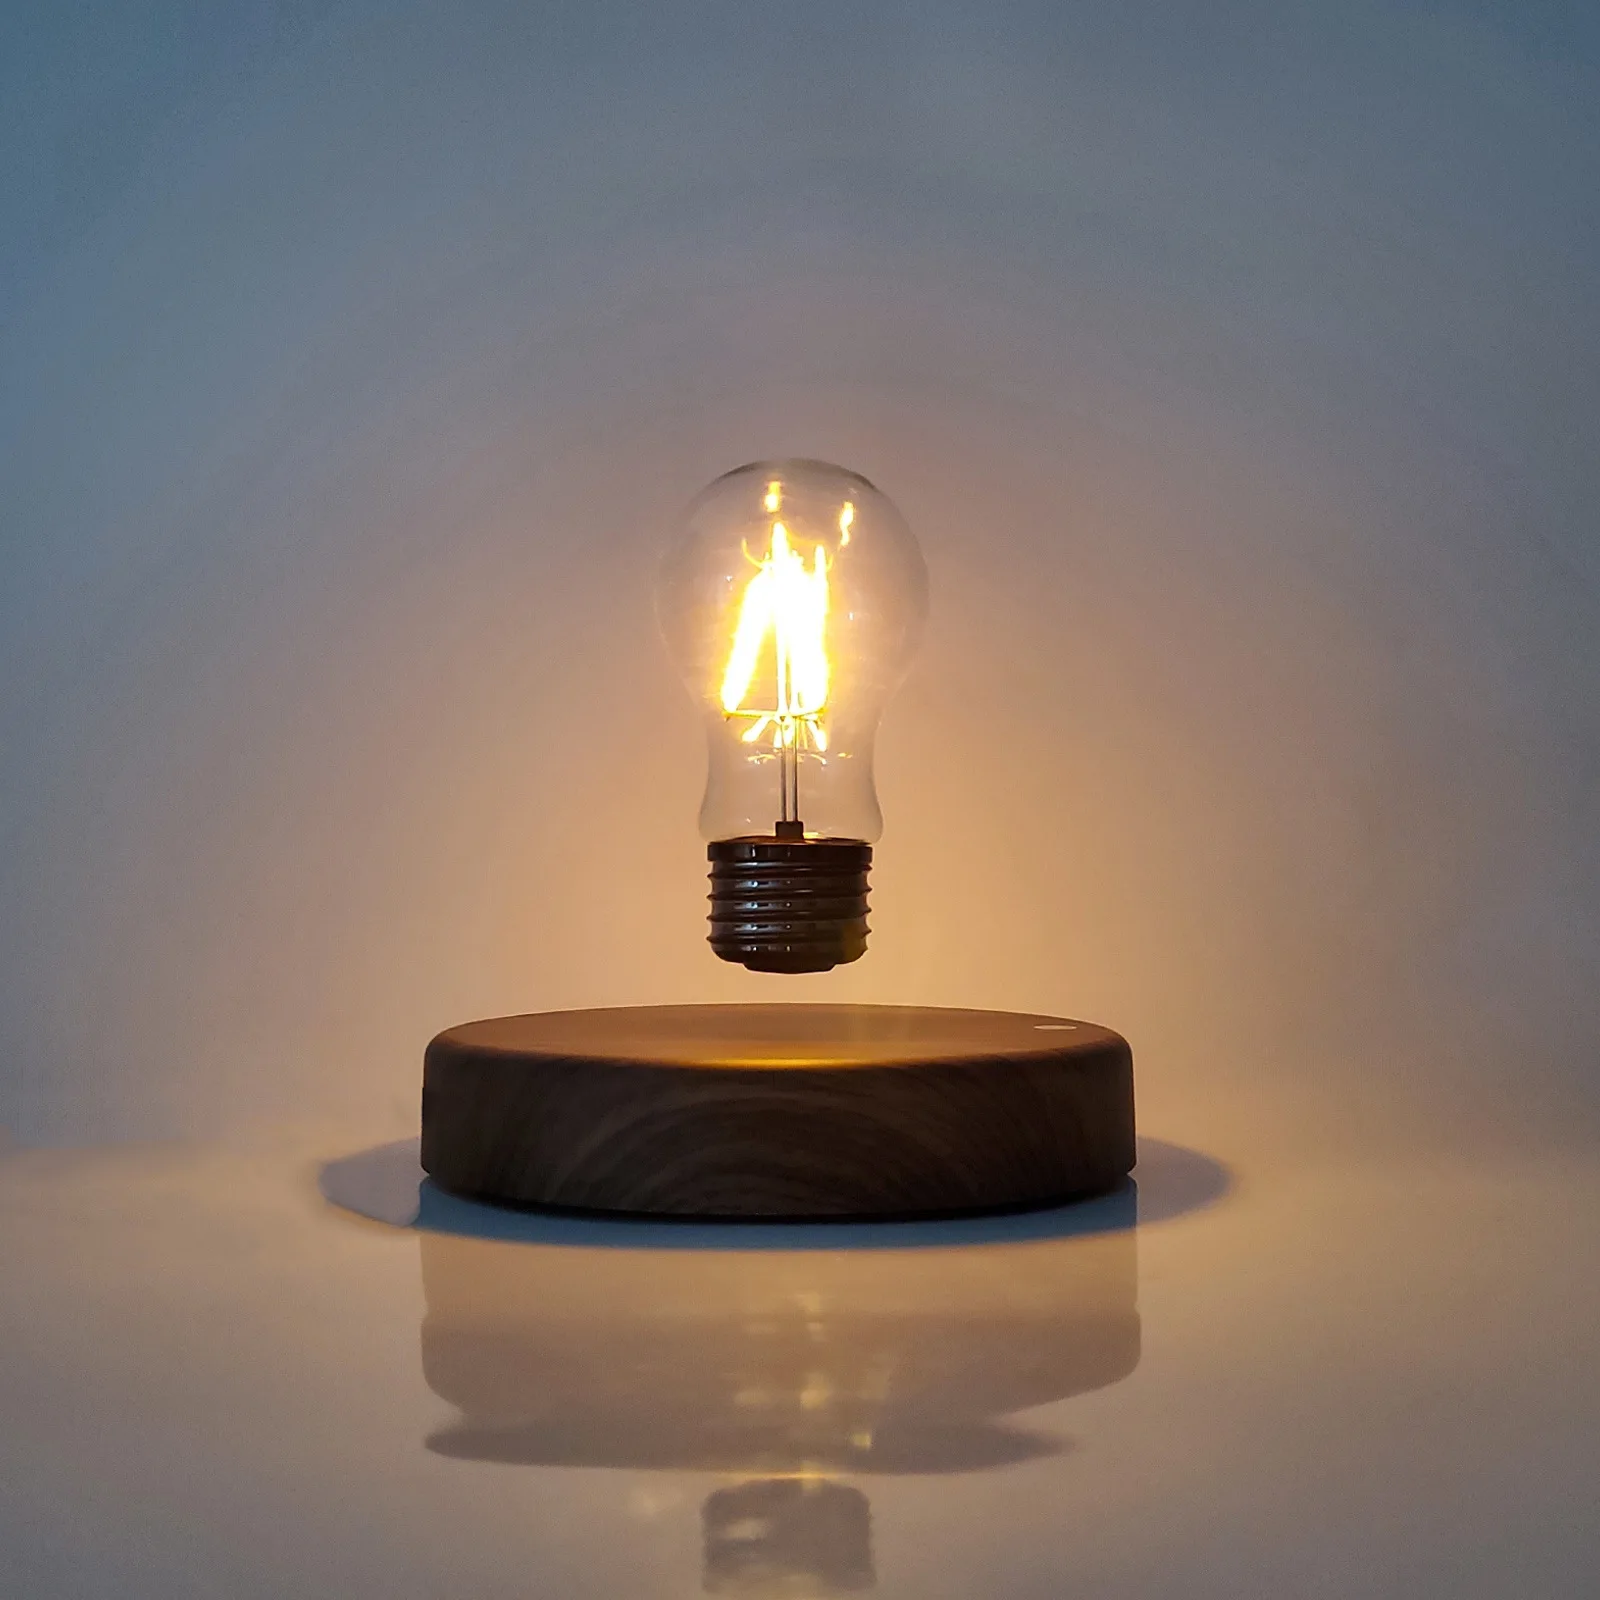 Children Sleep Magnetic Levitation Lamp Creativity Floating LED Bulb For Floating Light For Room Home Office Decoration